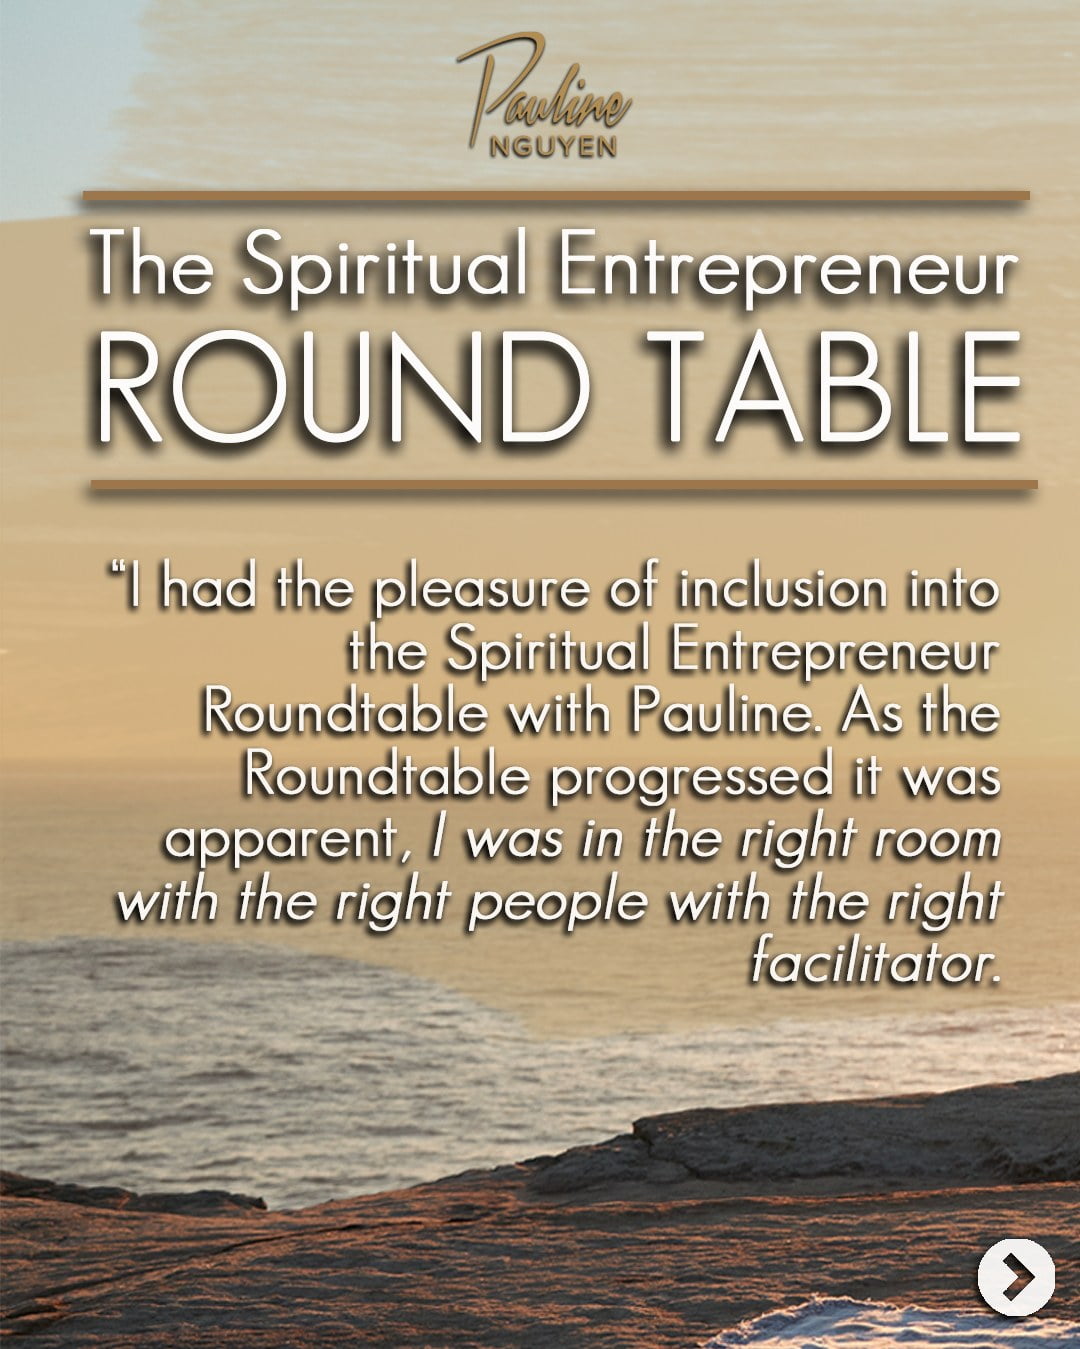 THE SPIRITUAL ENTREPRENEUR ROUND TABLE IS BACK!